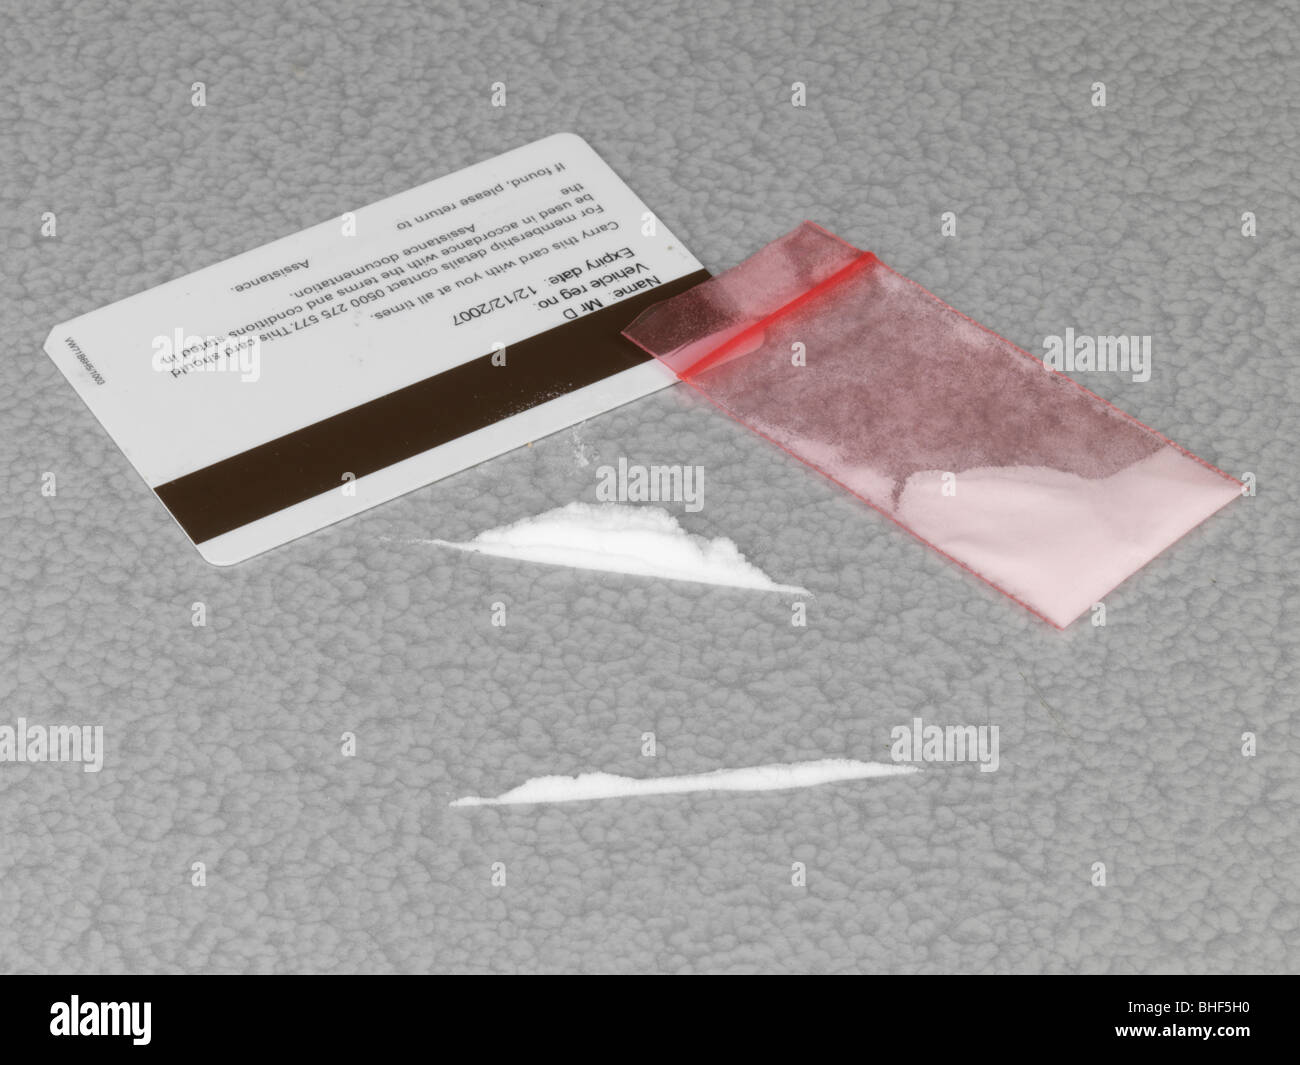 Pulverisierte Amphetamin Drogen Stockfoto